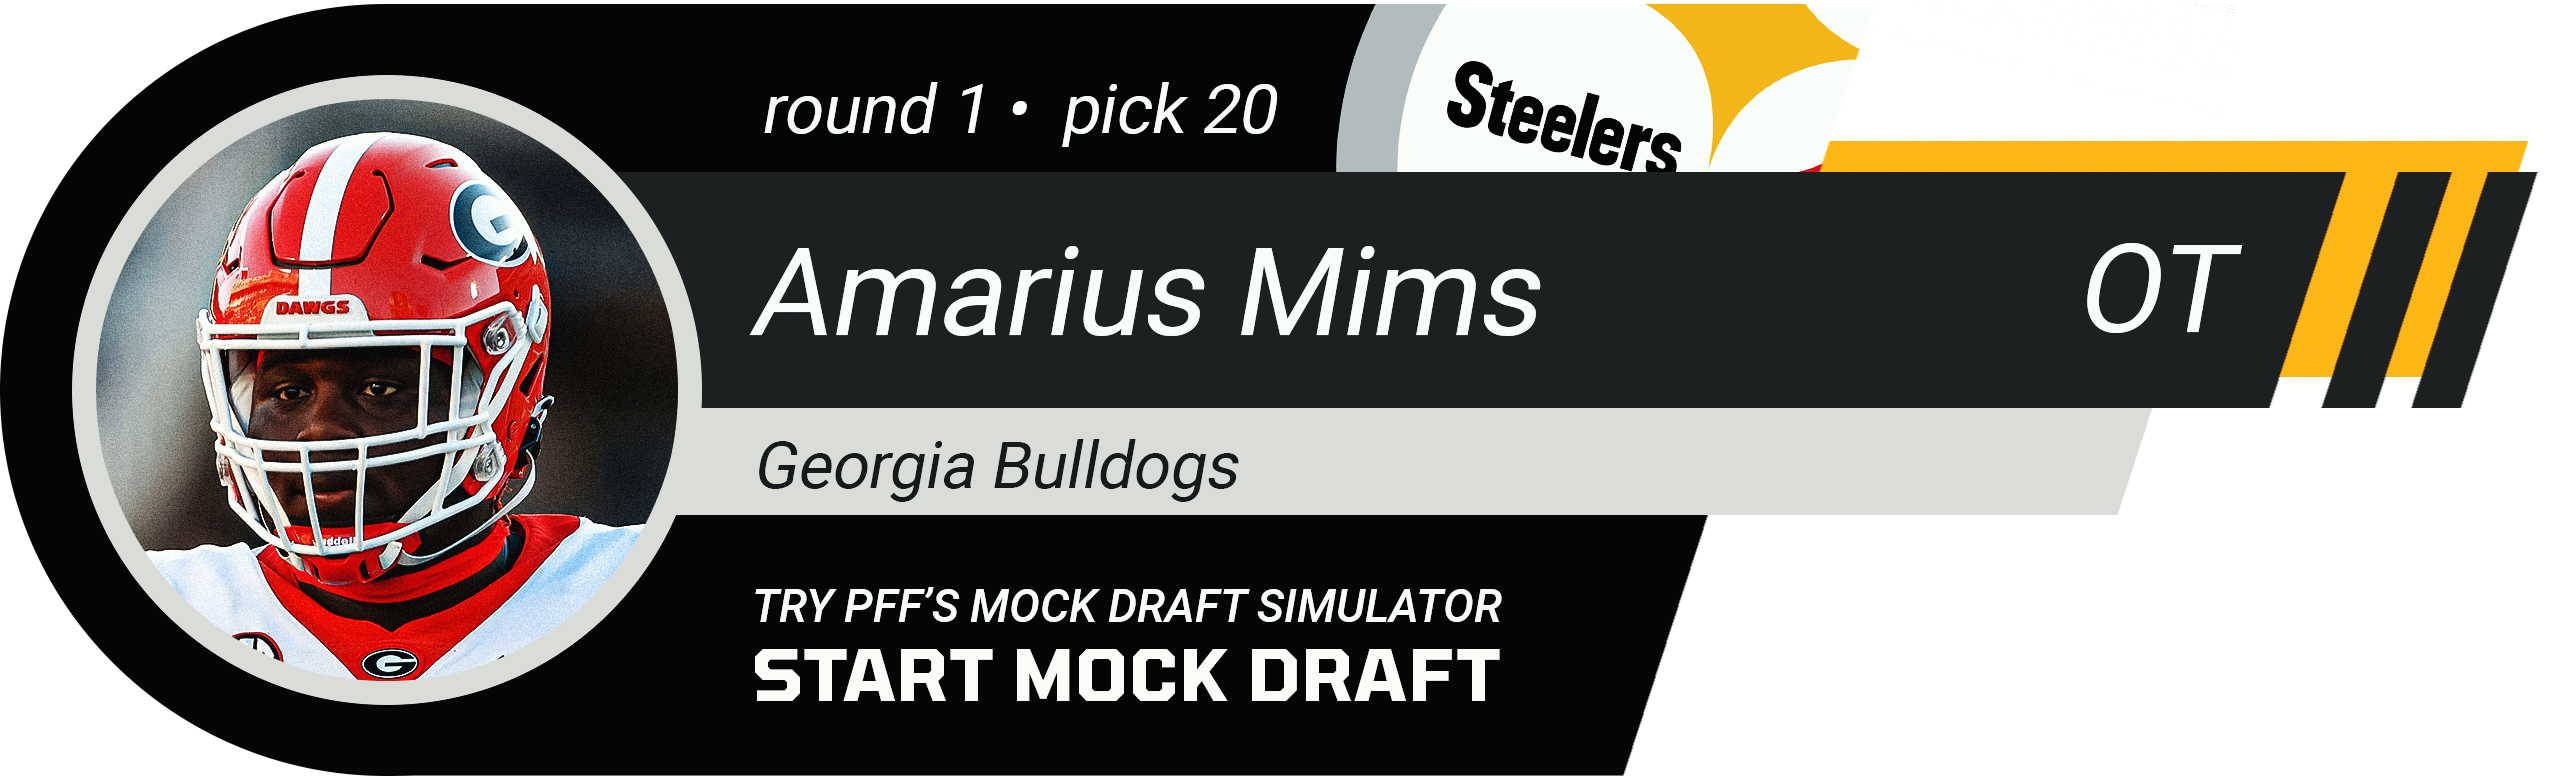 20. Pittsburgh Steelers: T Amarius Mims, Georgia